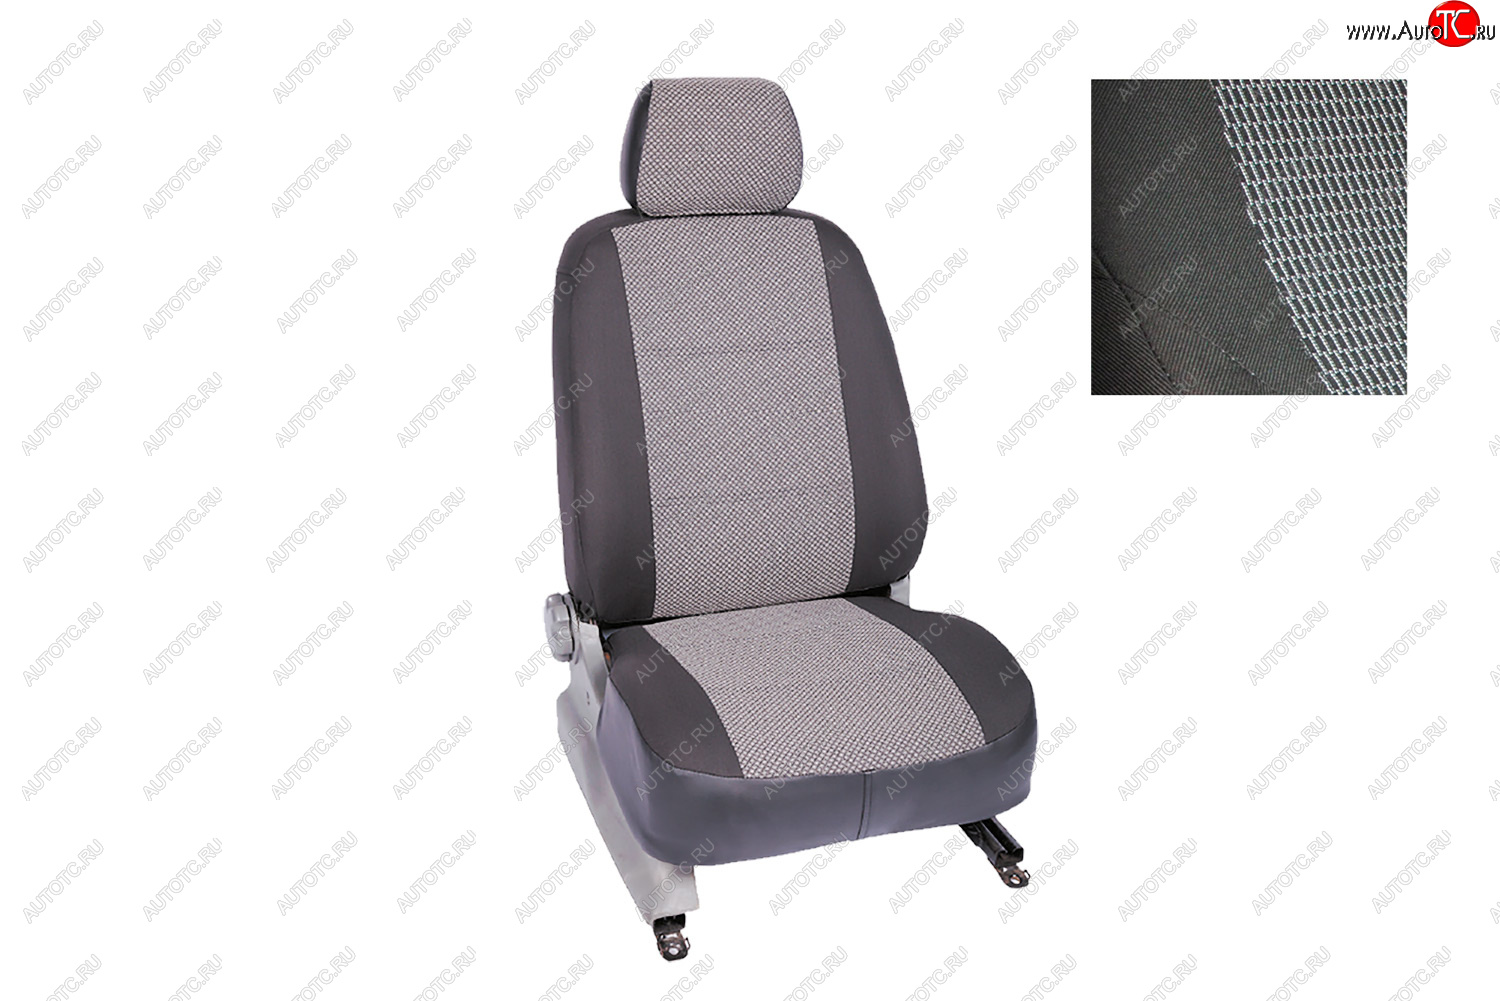 4 199 р. Чехлы для сидений Seintex (жаккард, 40/60, Airbag, подлокотники)  KIA Cerato  2 TD (2008-2013)